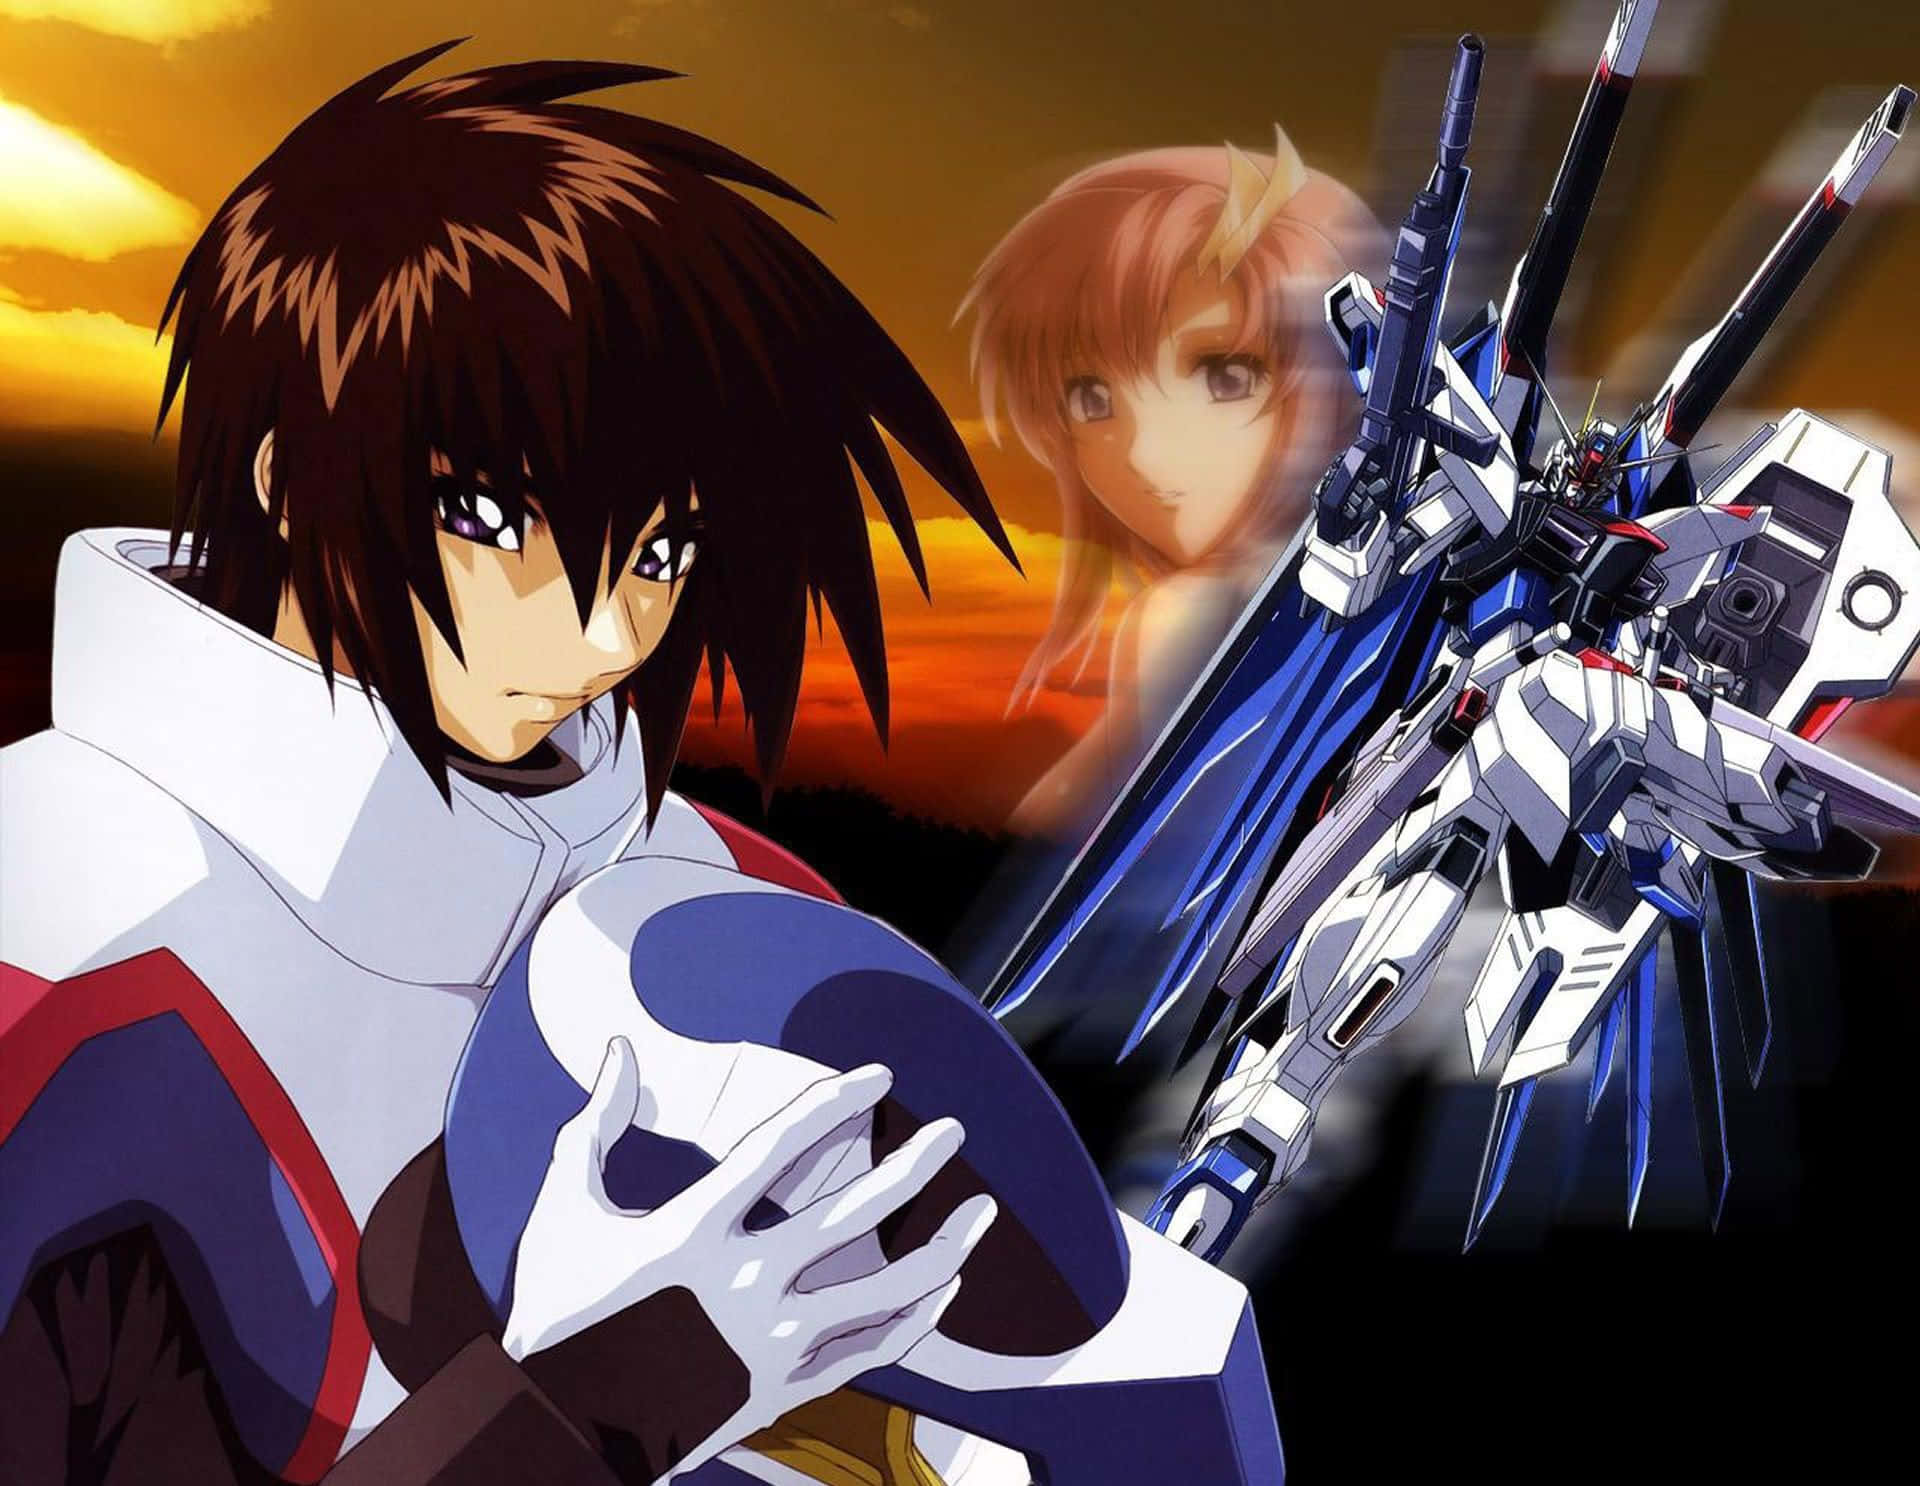 "kira Yamato In Action – Gundam Seed" Wallpaper